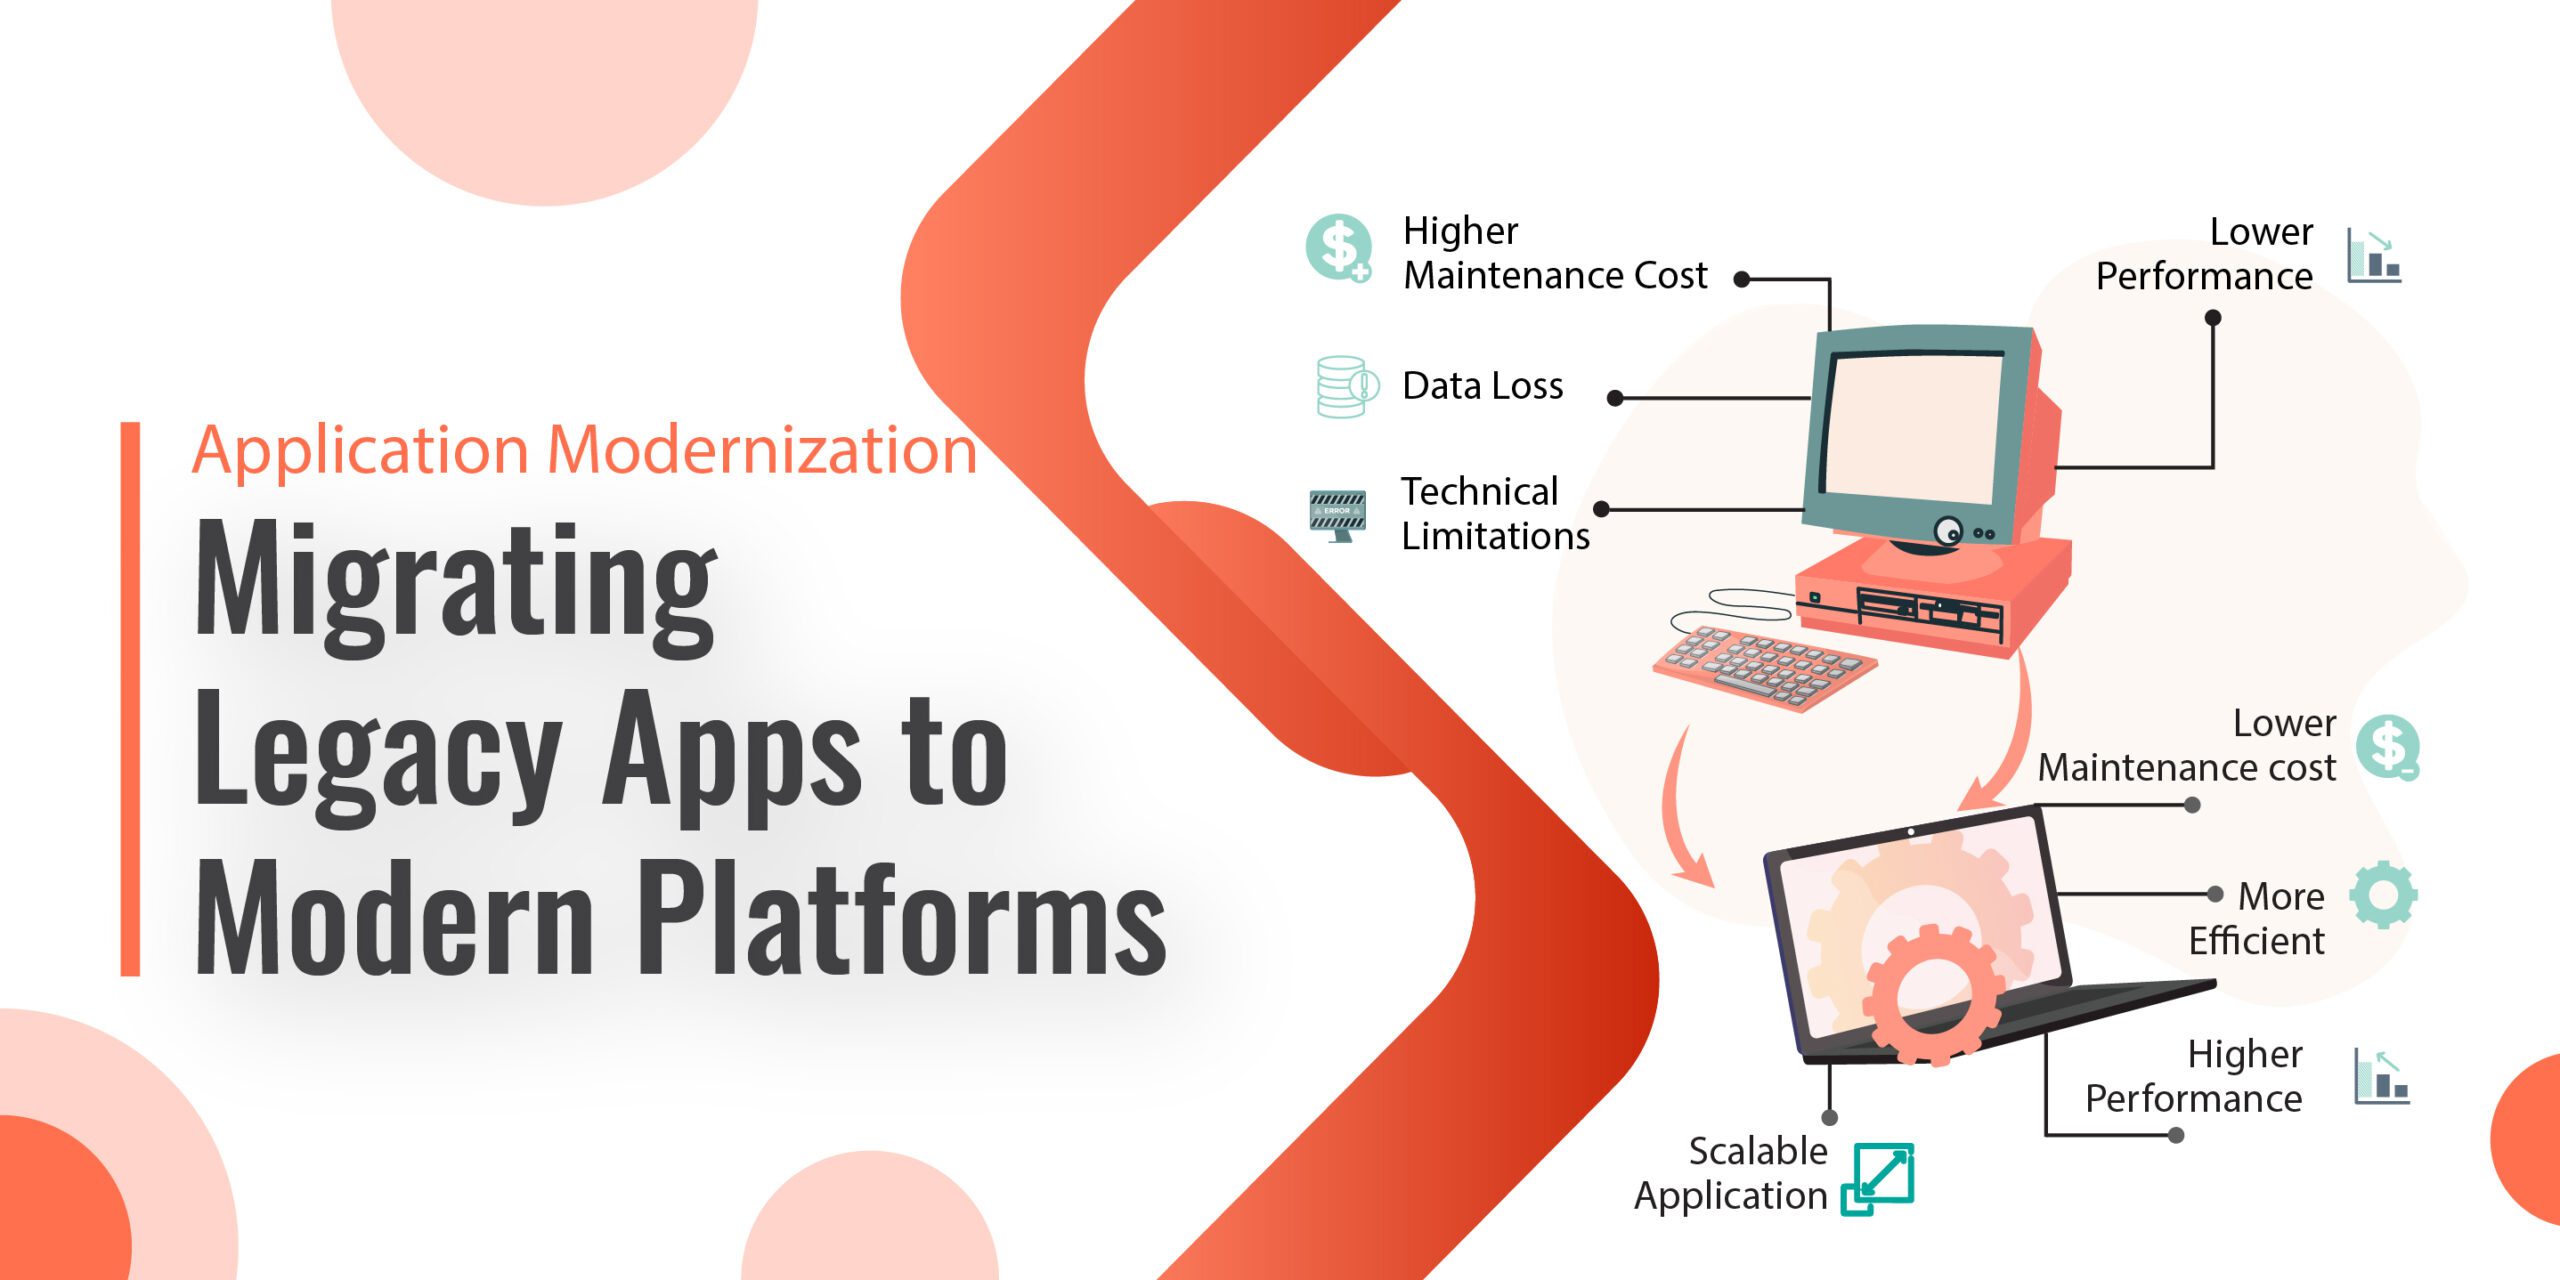 Migrating Legacy Apps to Modern Platforms Image